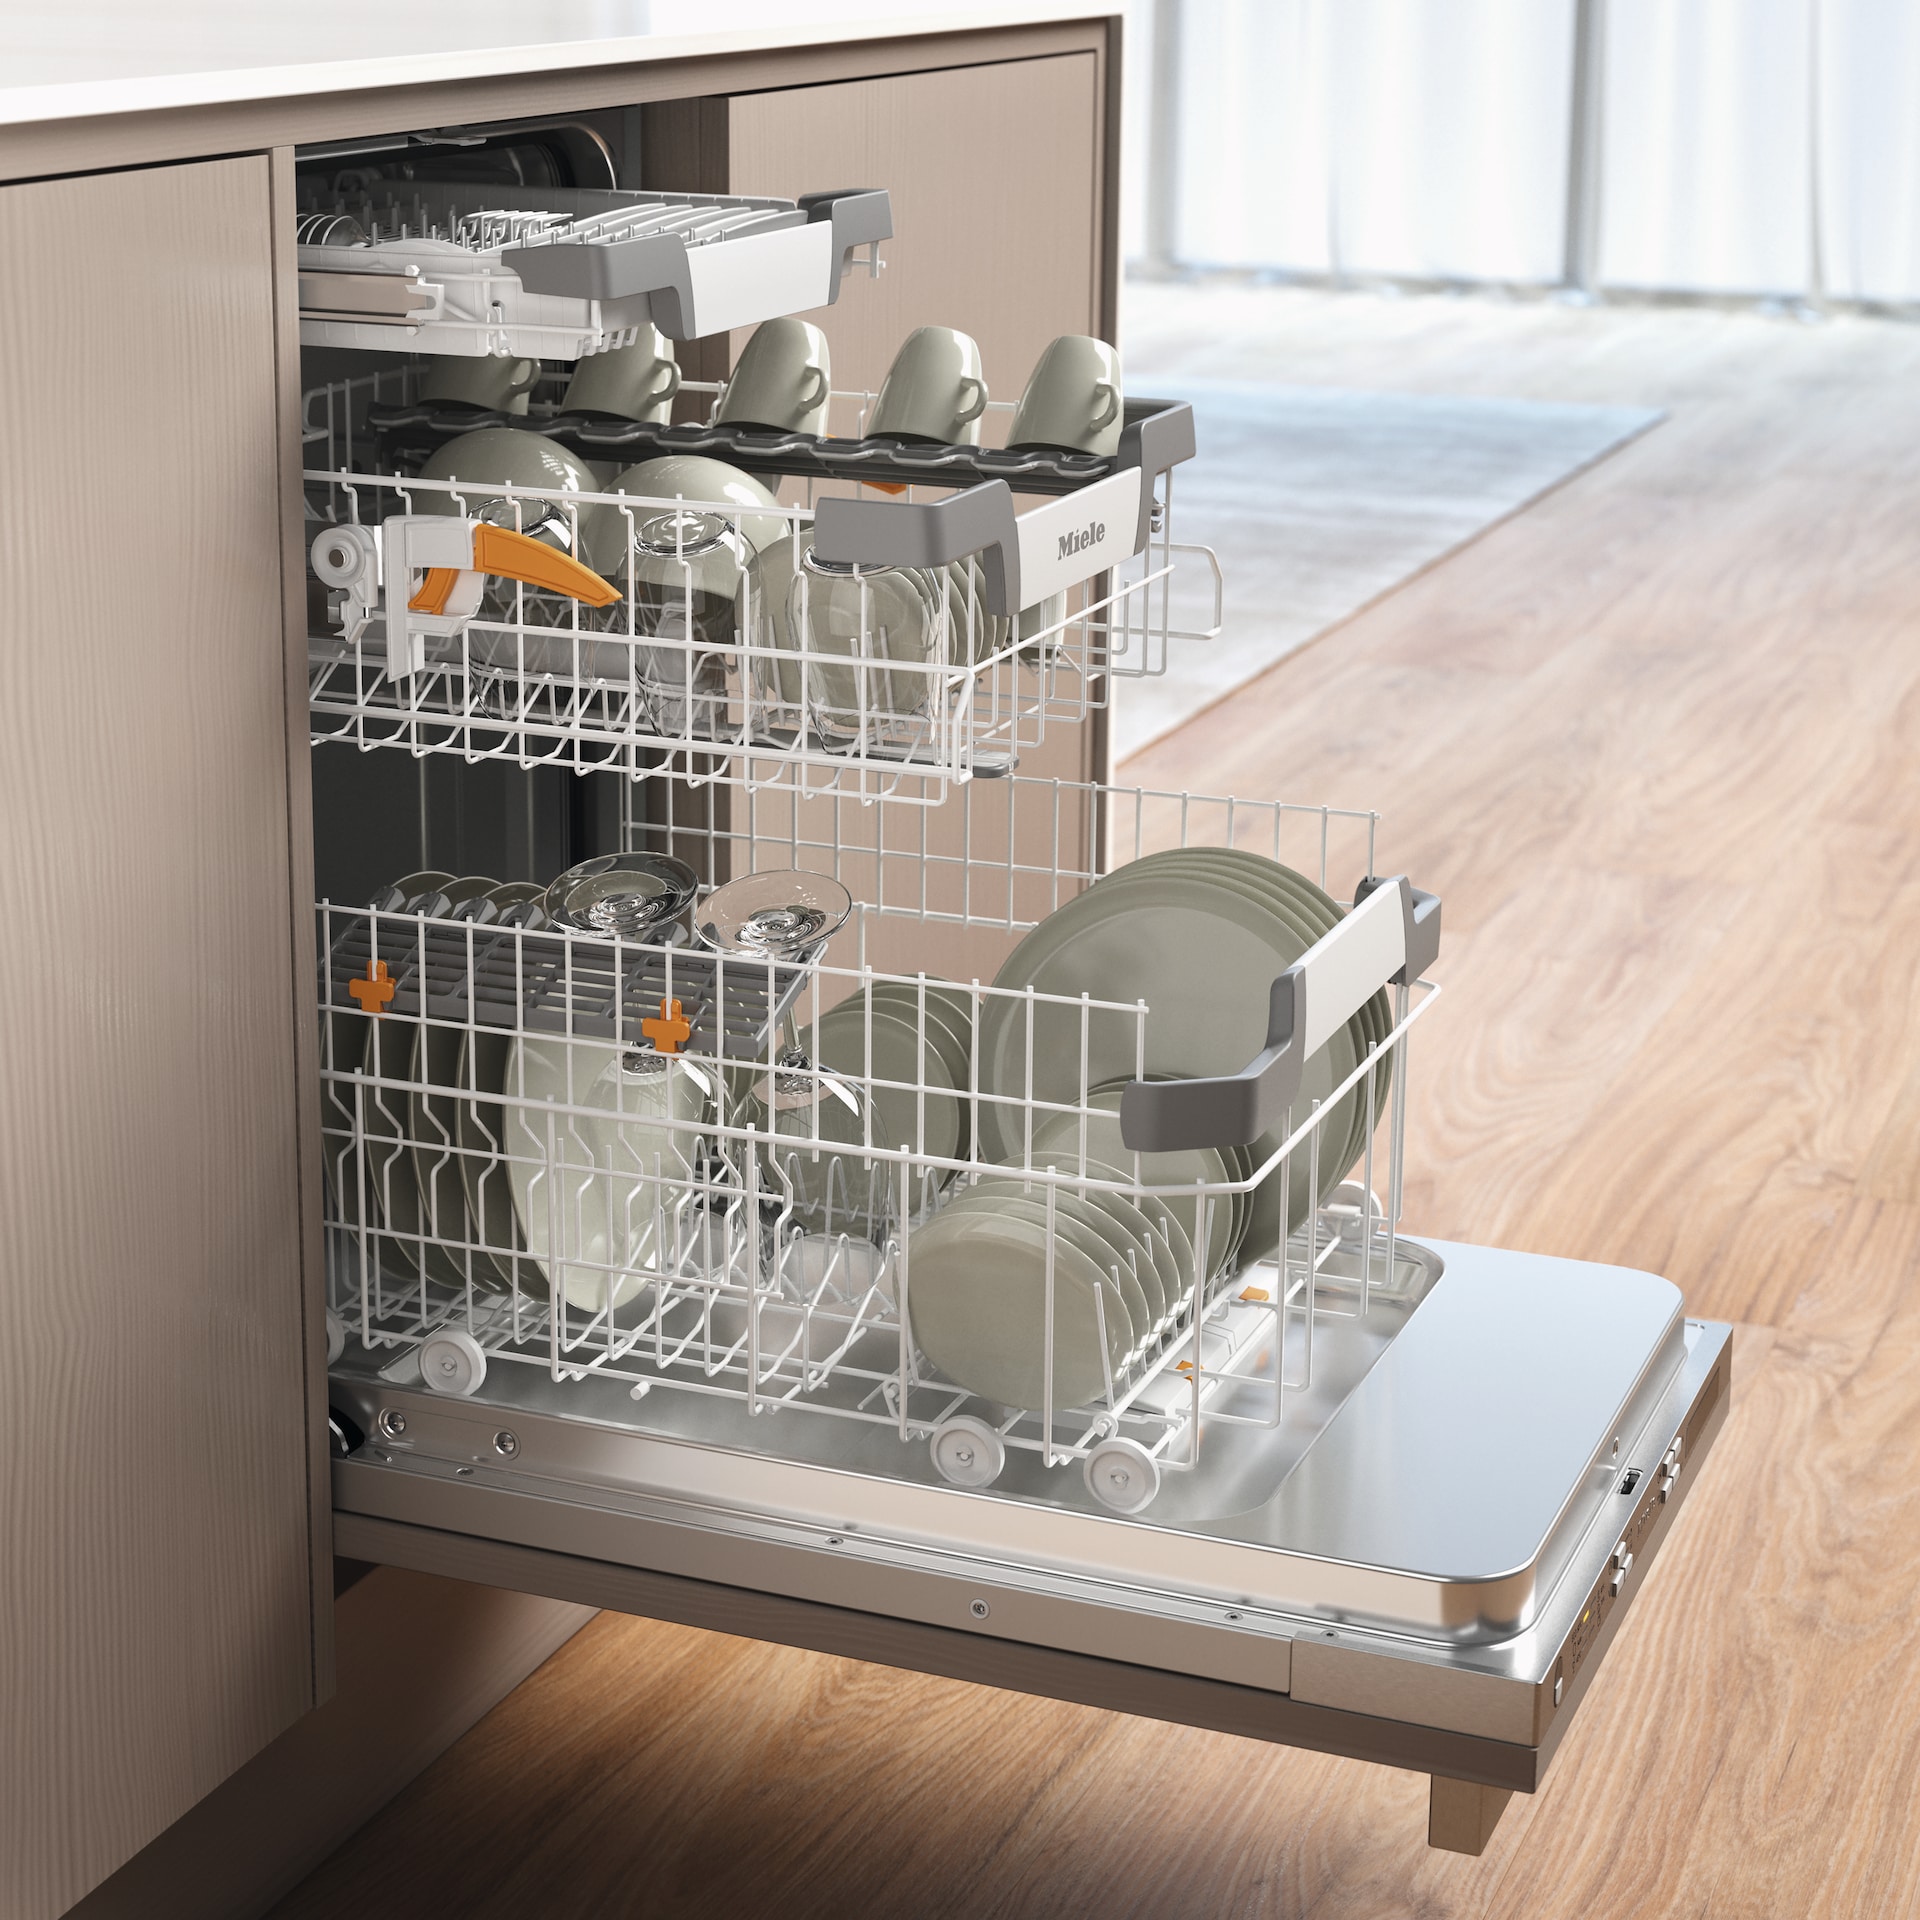 Dishwashers - G 5790 SCVi SL Stainless steel/CleanSteel - 4